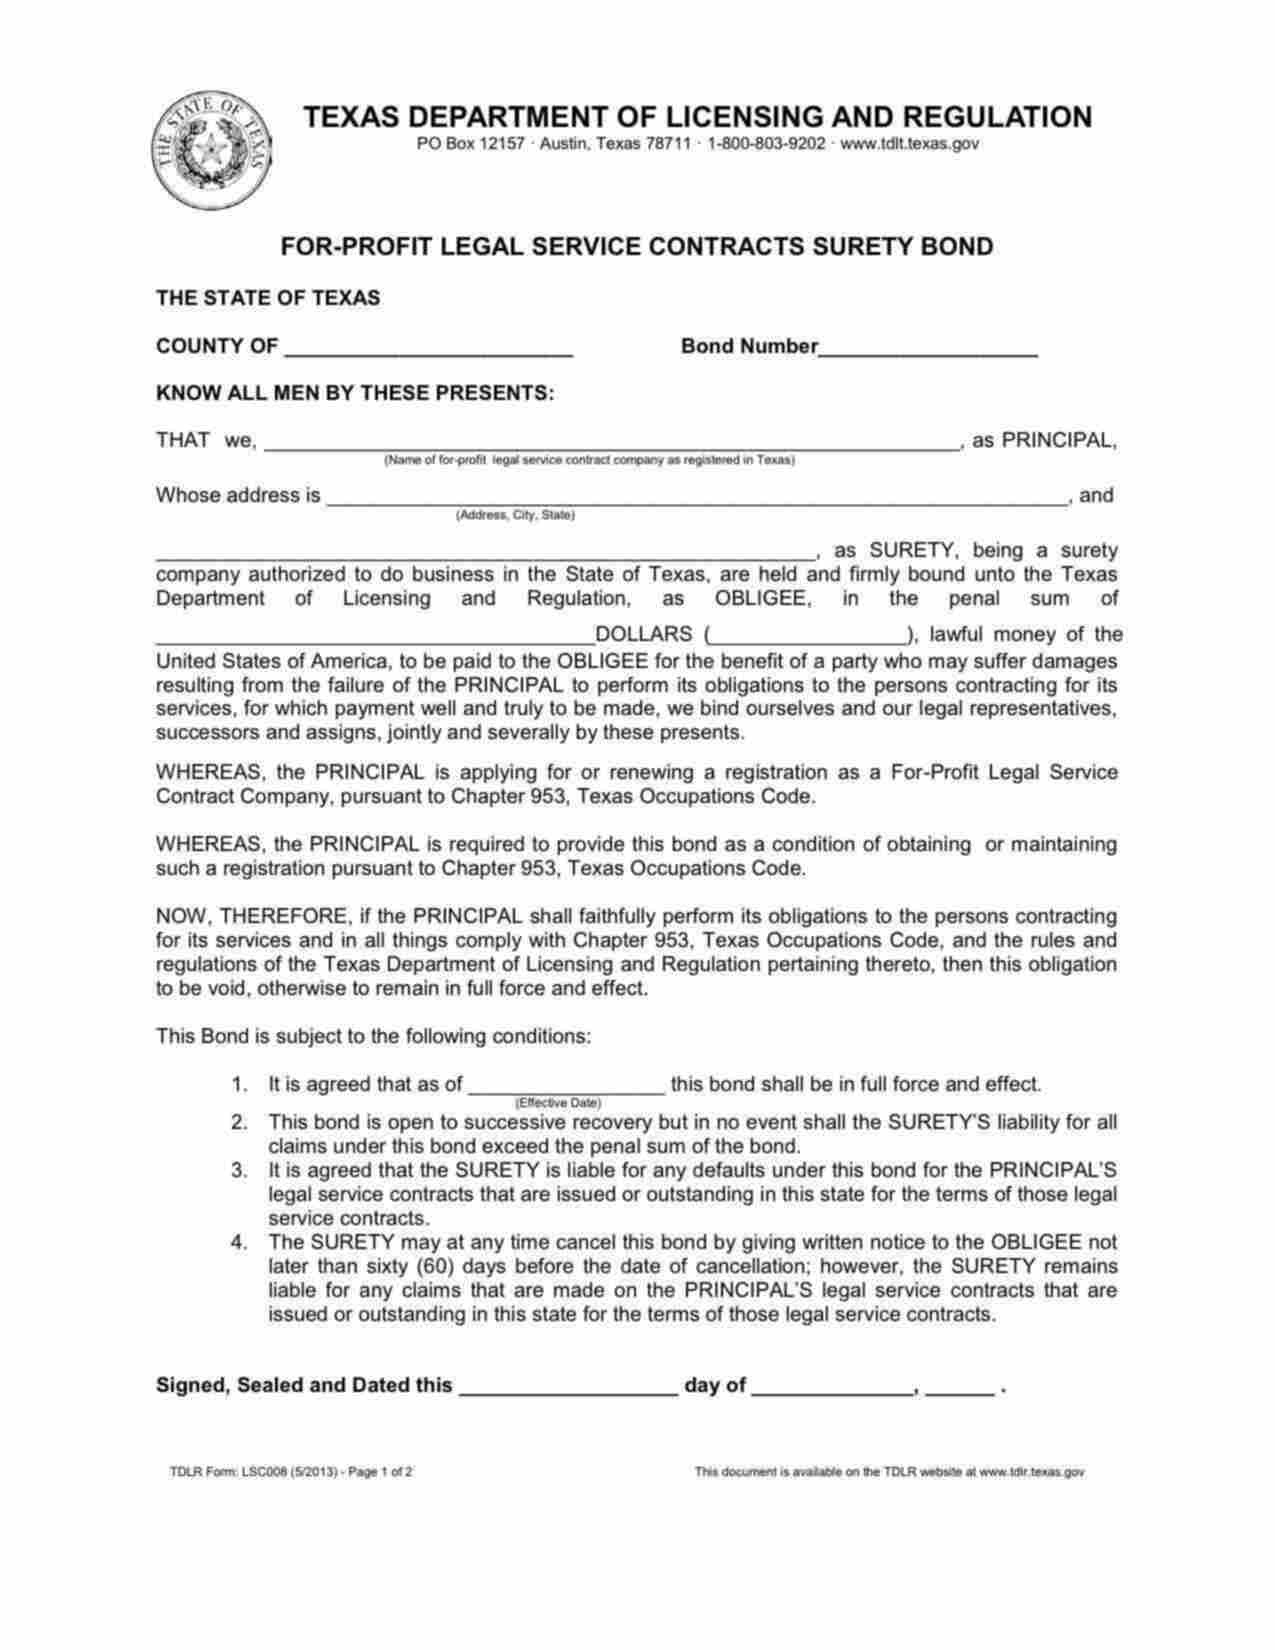 Texas For-Profit Legal Service Contracts Bond Form